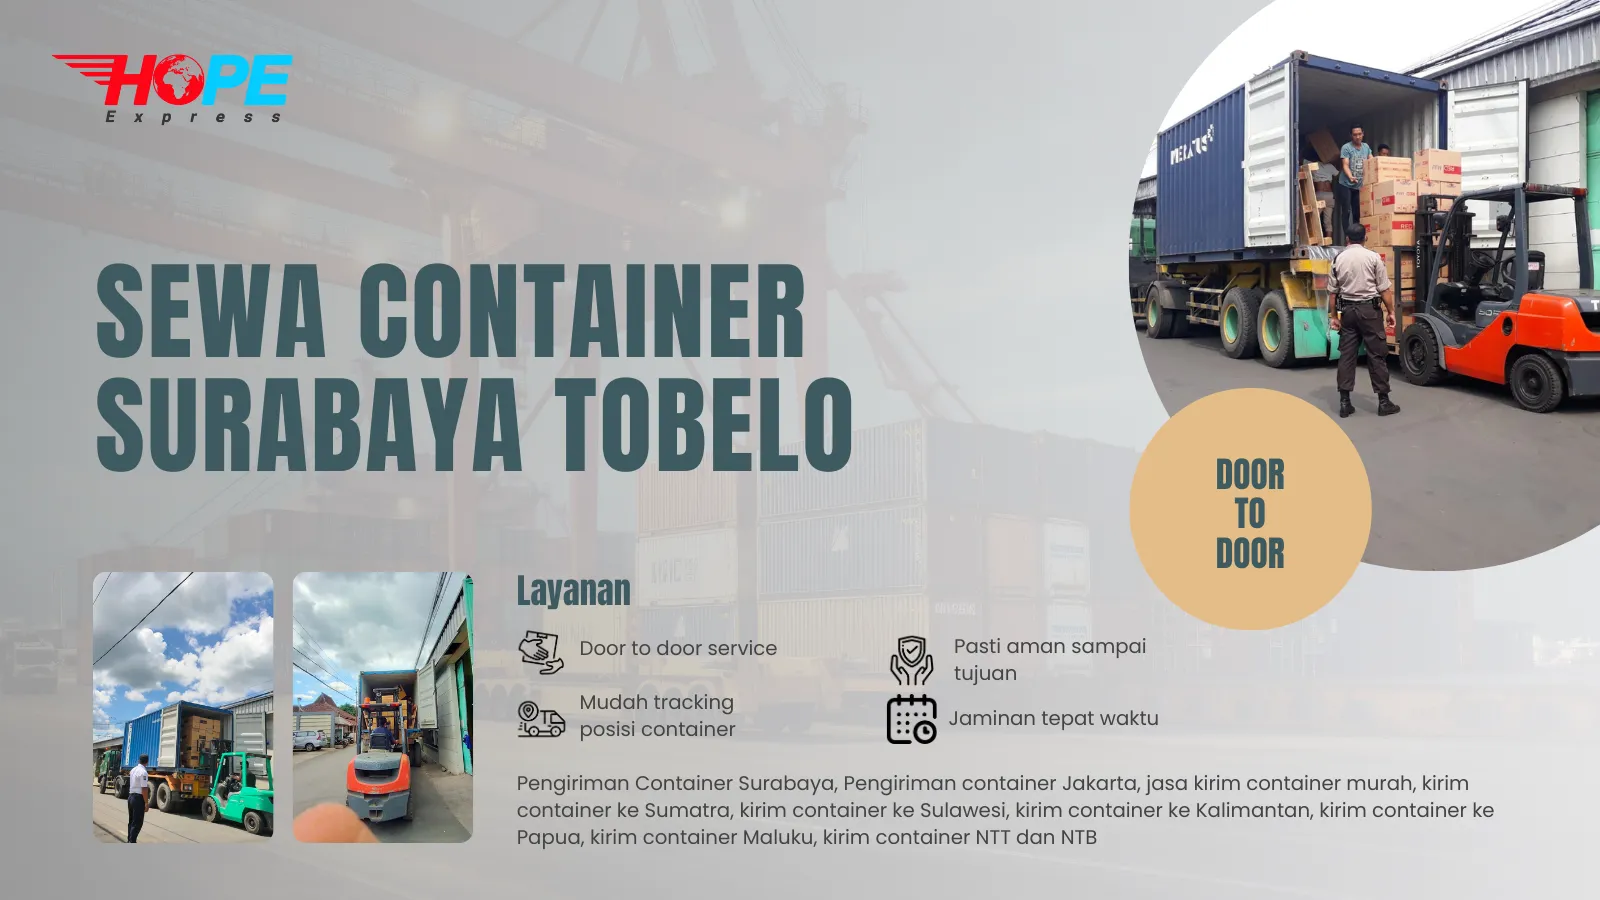 Sewa Container Surabaya Tobelo